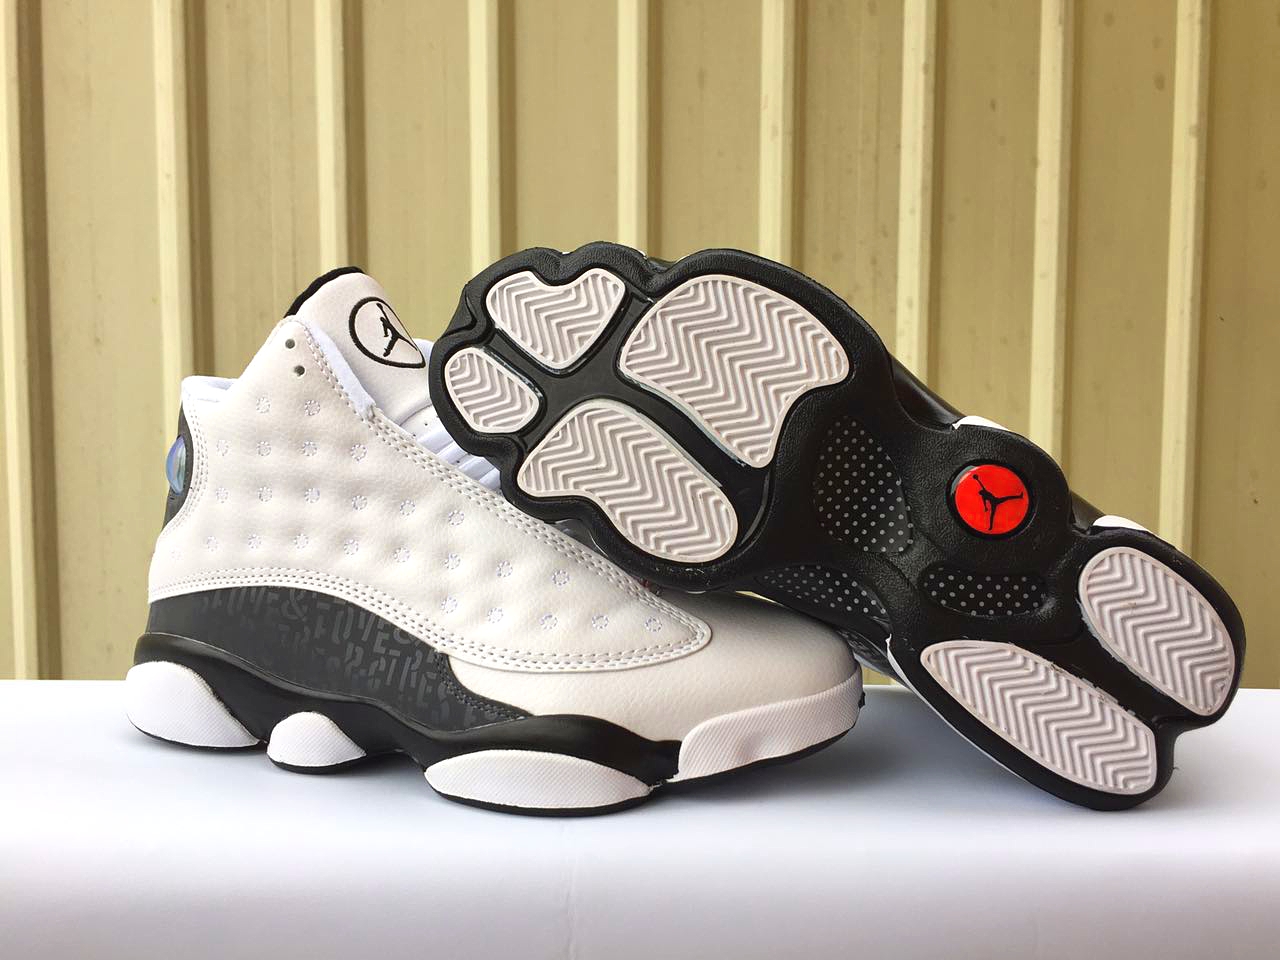 New Air Jordan 13 Love White Black Shoes - Click Image to Close